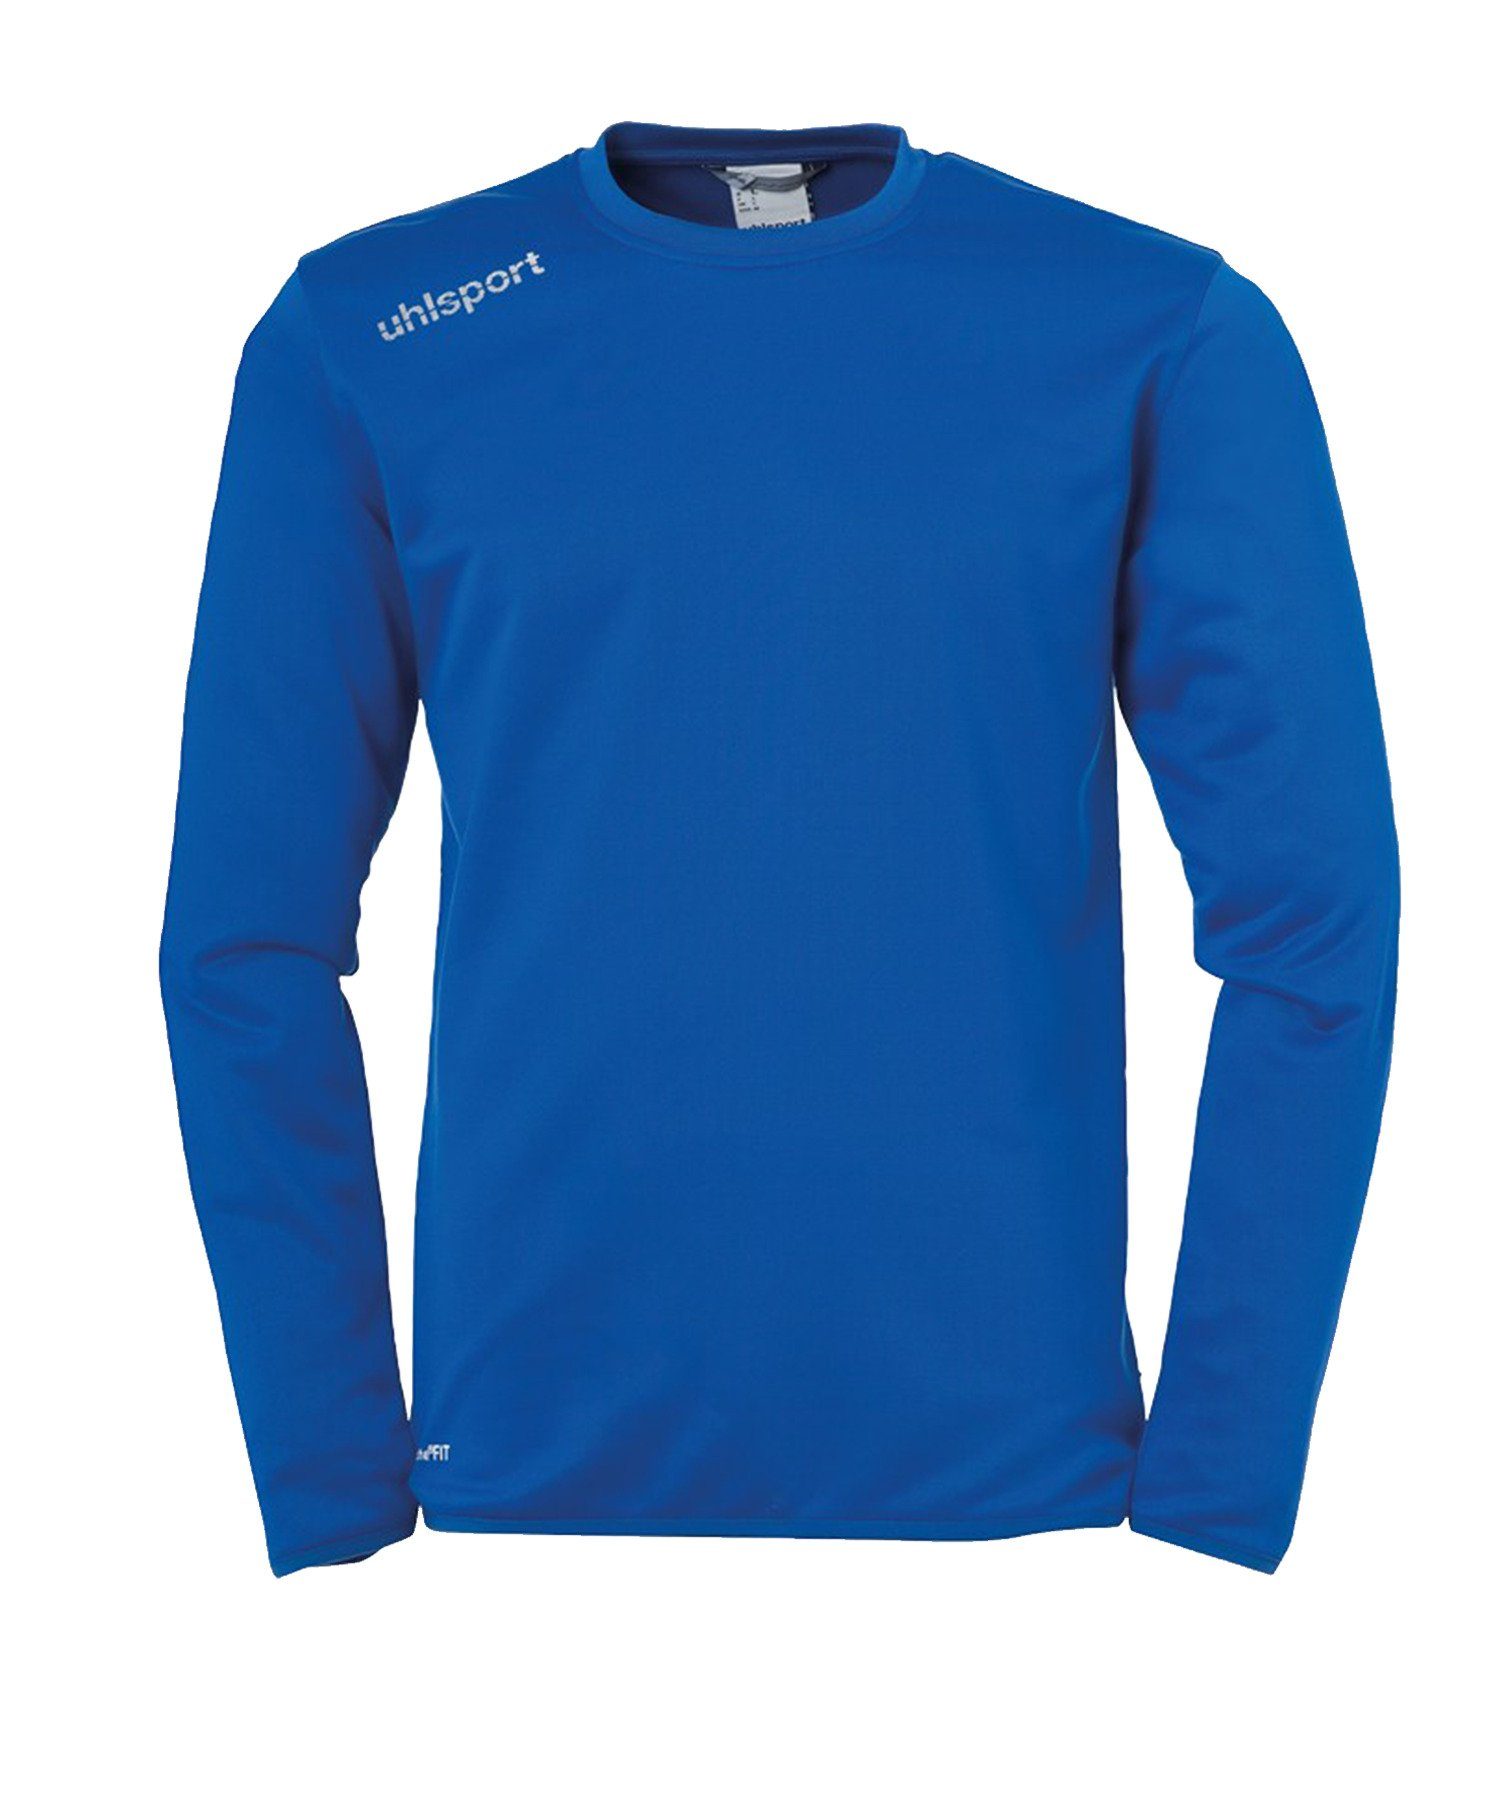 uhlsport Sweatshirt Essential Trainingstop langarm blauWeiss